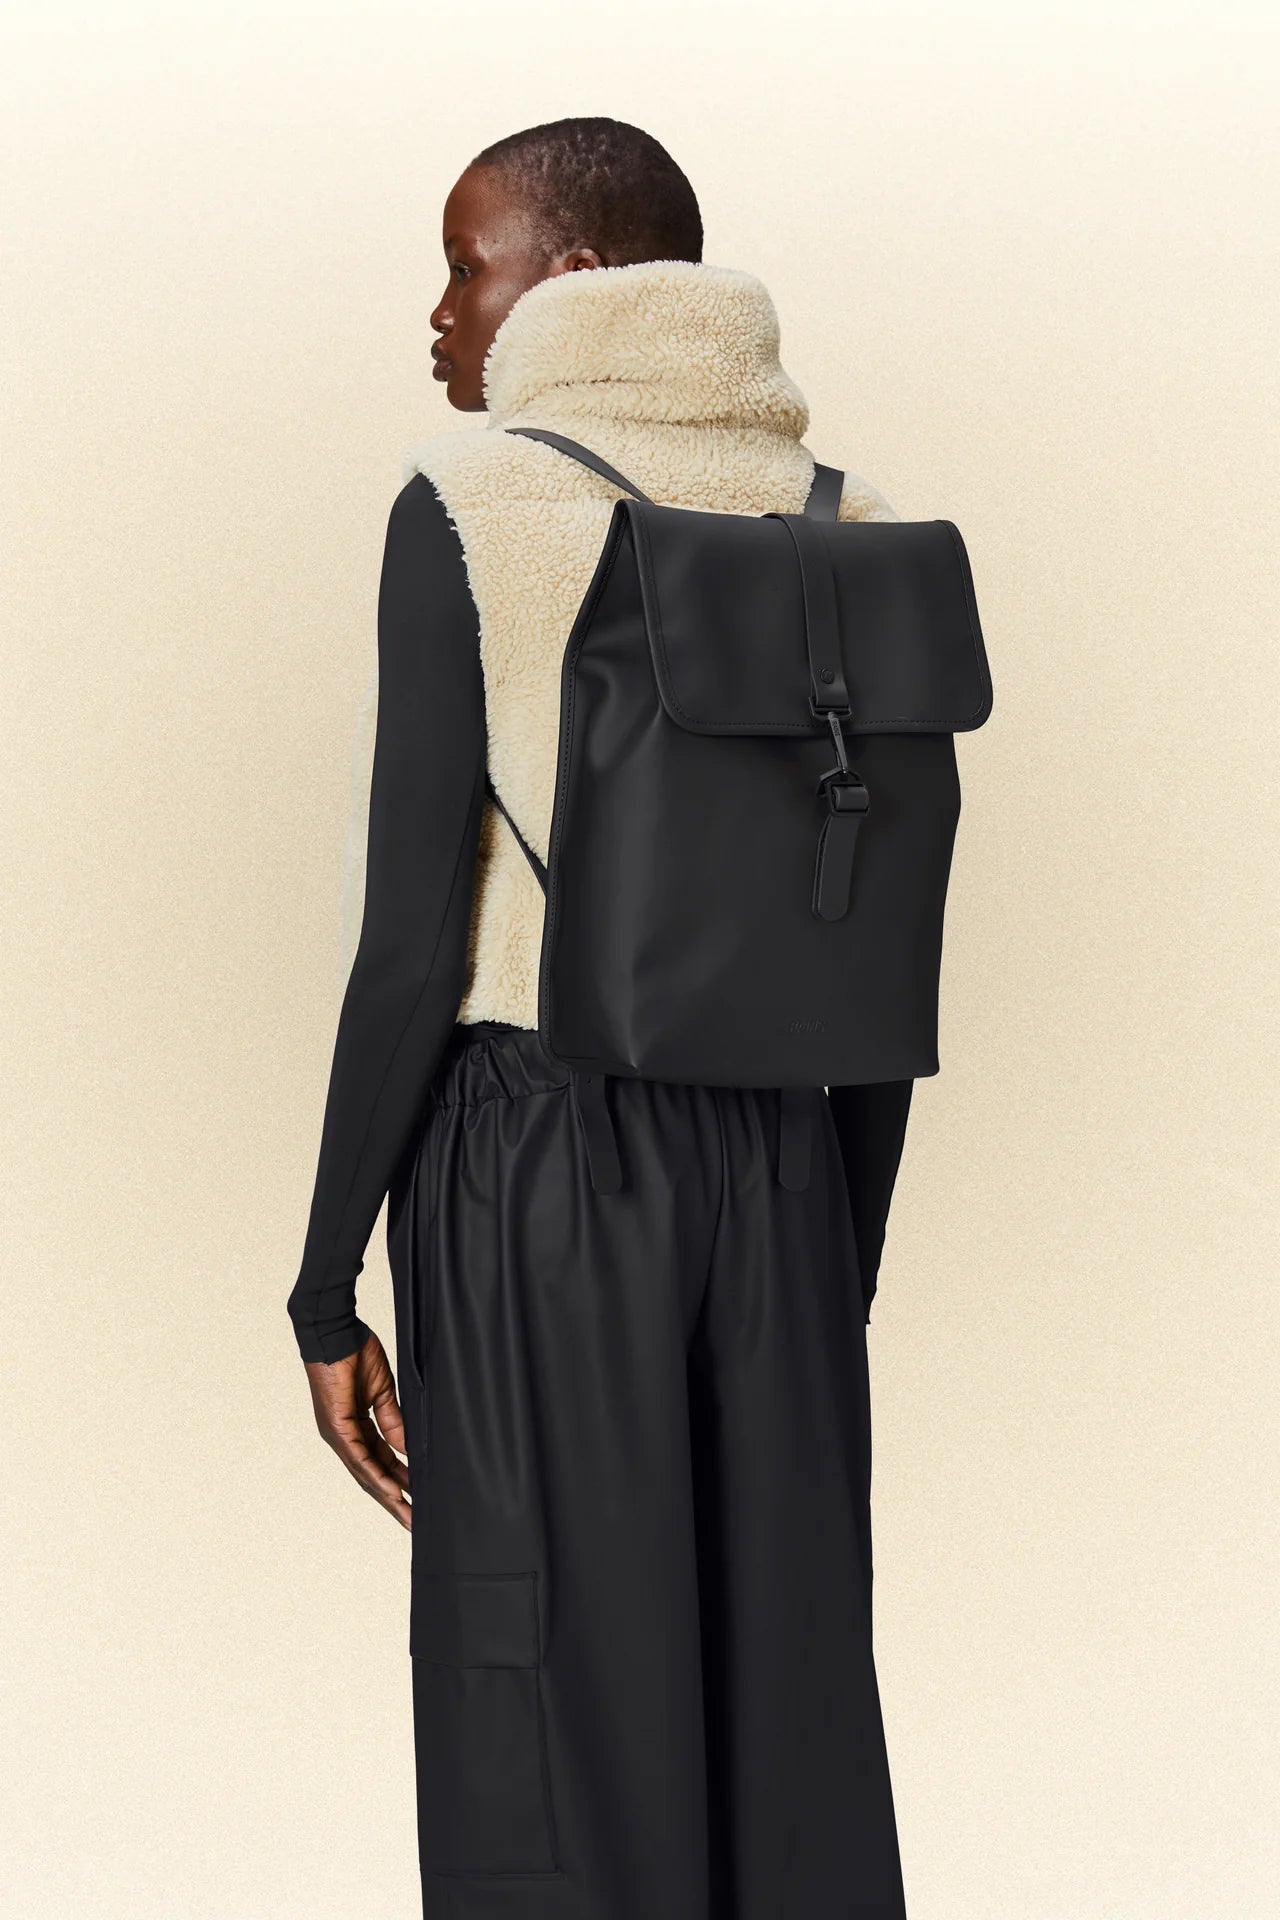 A woman wearing a black Rains waterproof backpack.